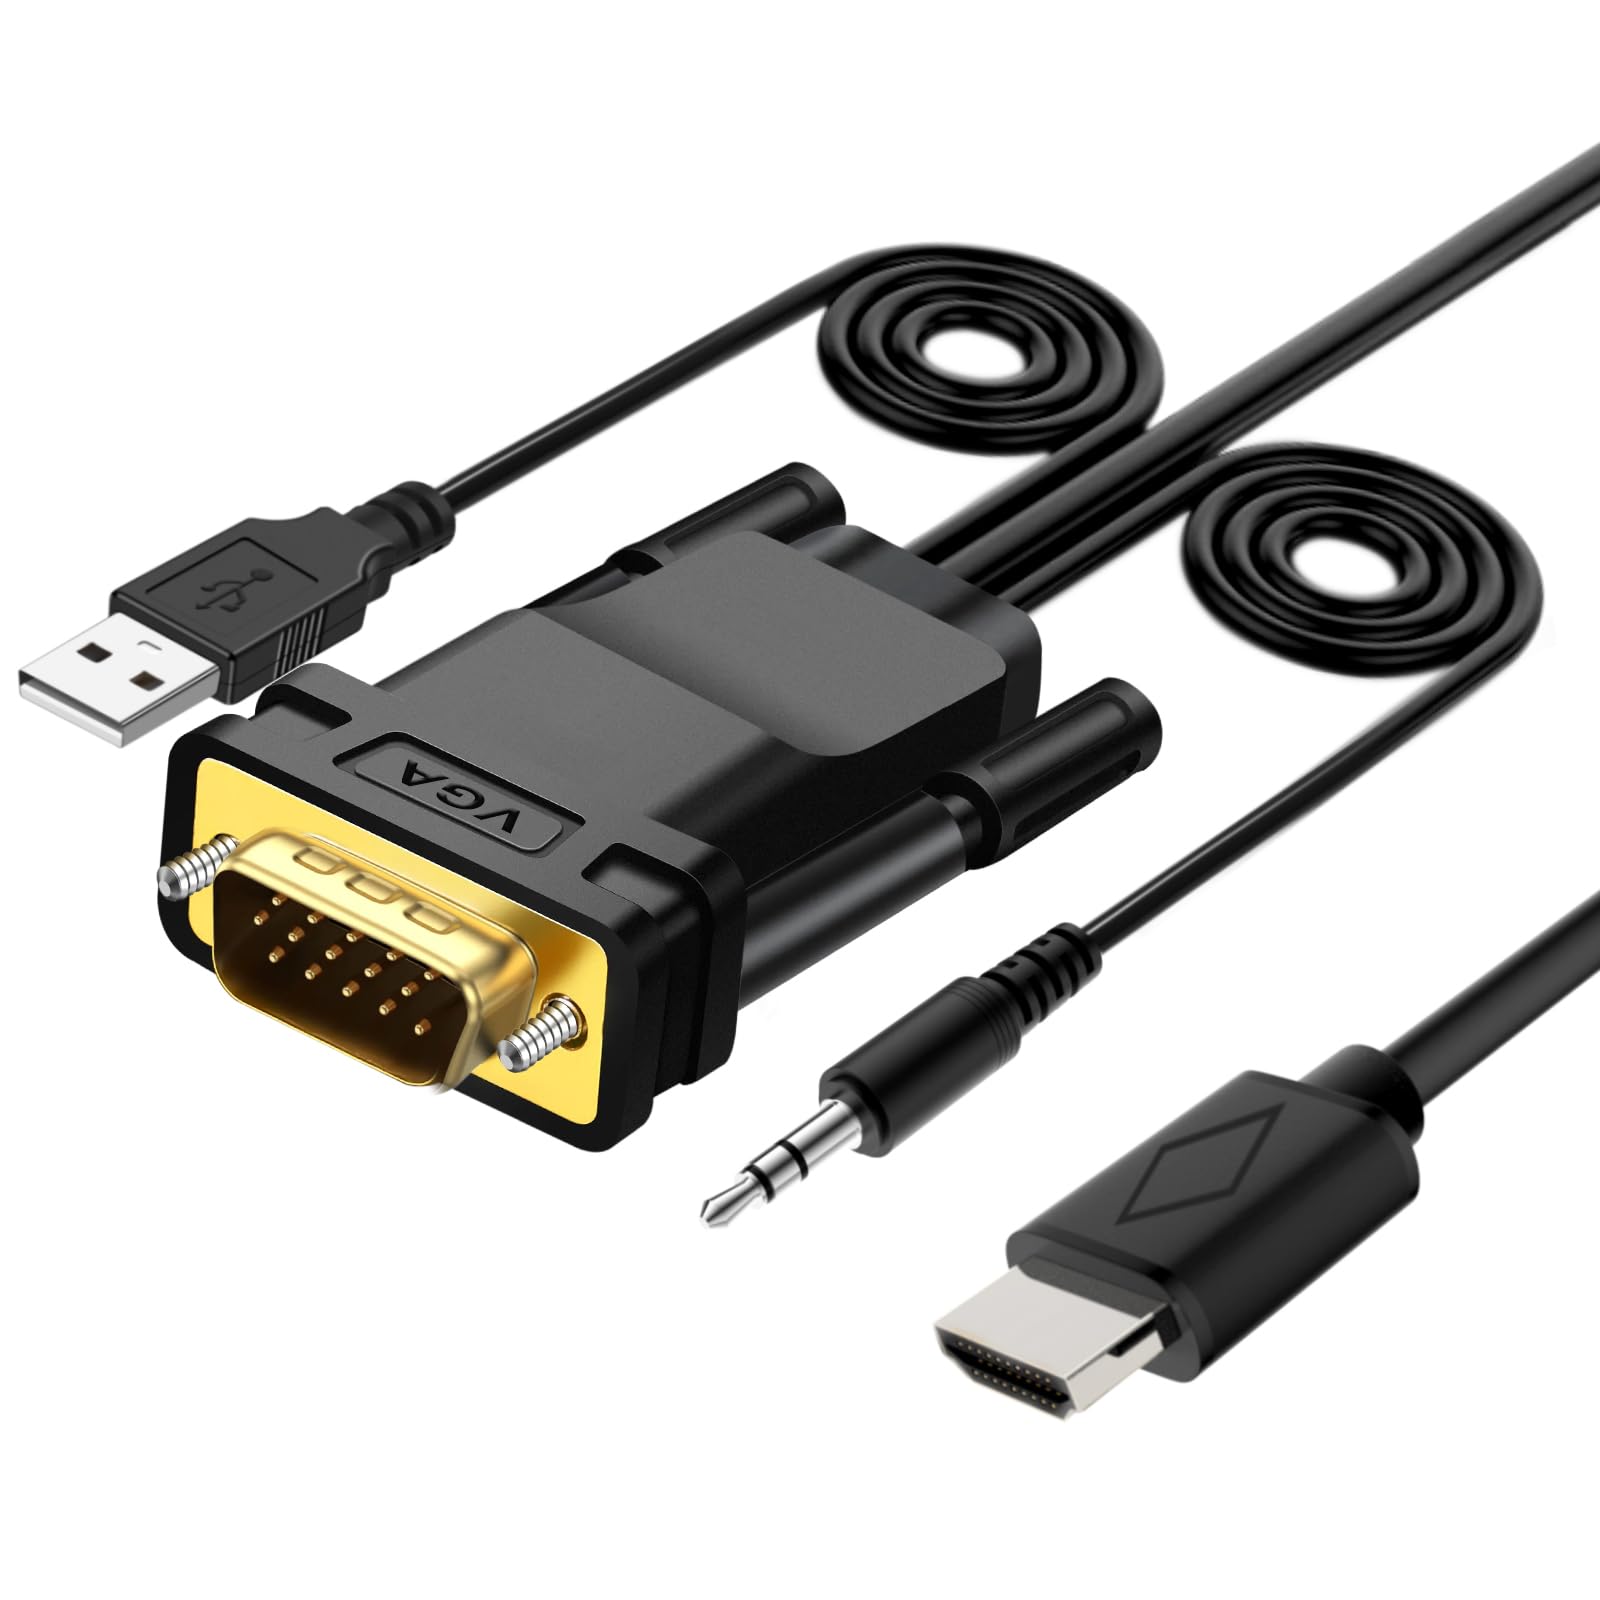 VGA to HDMI 変換ケーブル 1.8M VCOM VGA to HDMI 出力 変換アダプタ ビデオ 1080P@60Hz 音声転送 TV PC プロジェクター ディスプレイ 給電用USBケーブル 3.5mmオーディオケーブル 付属